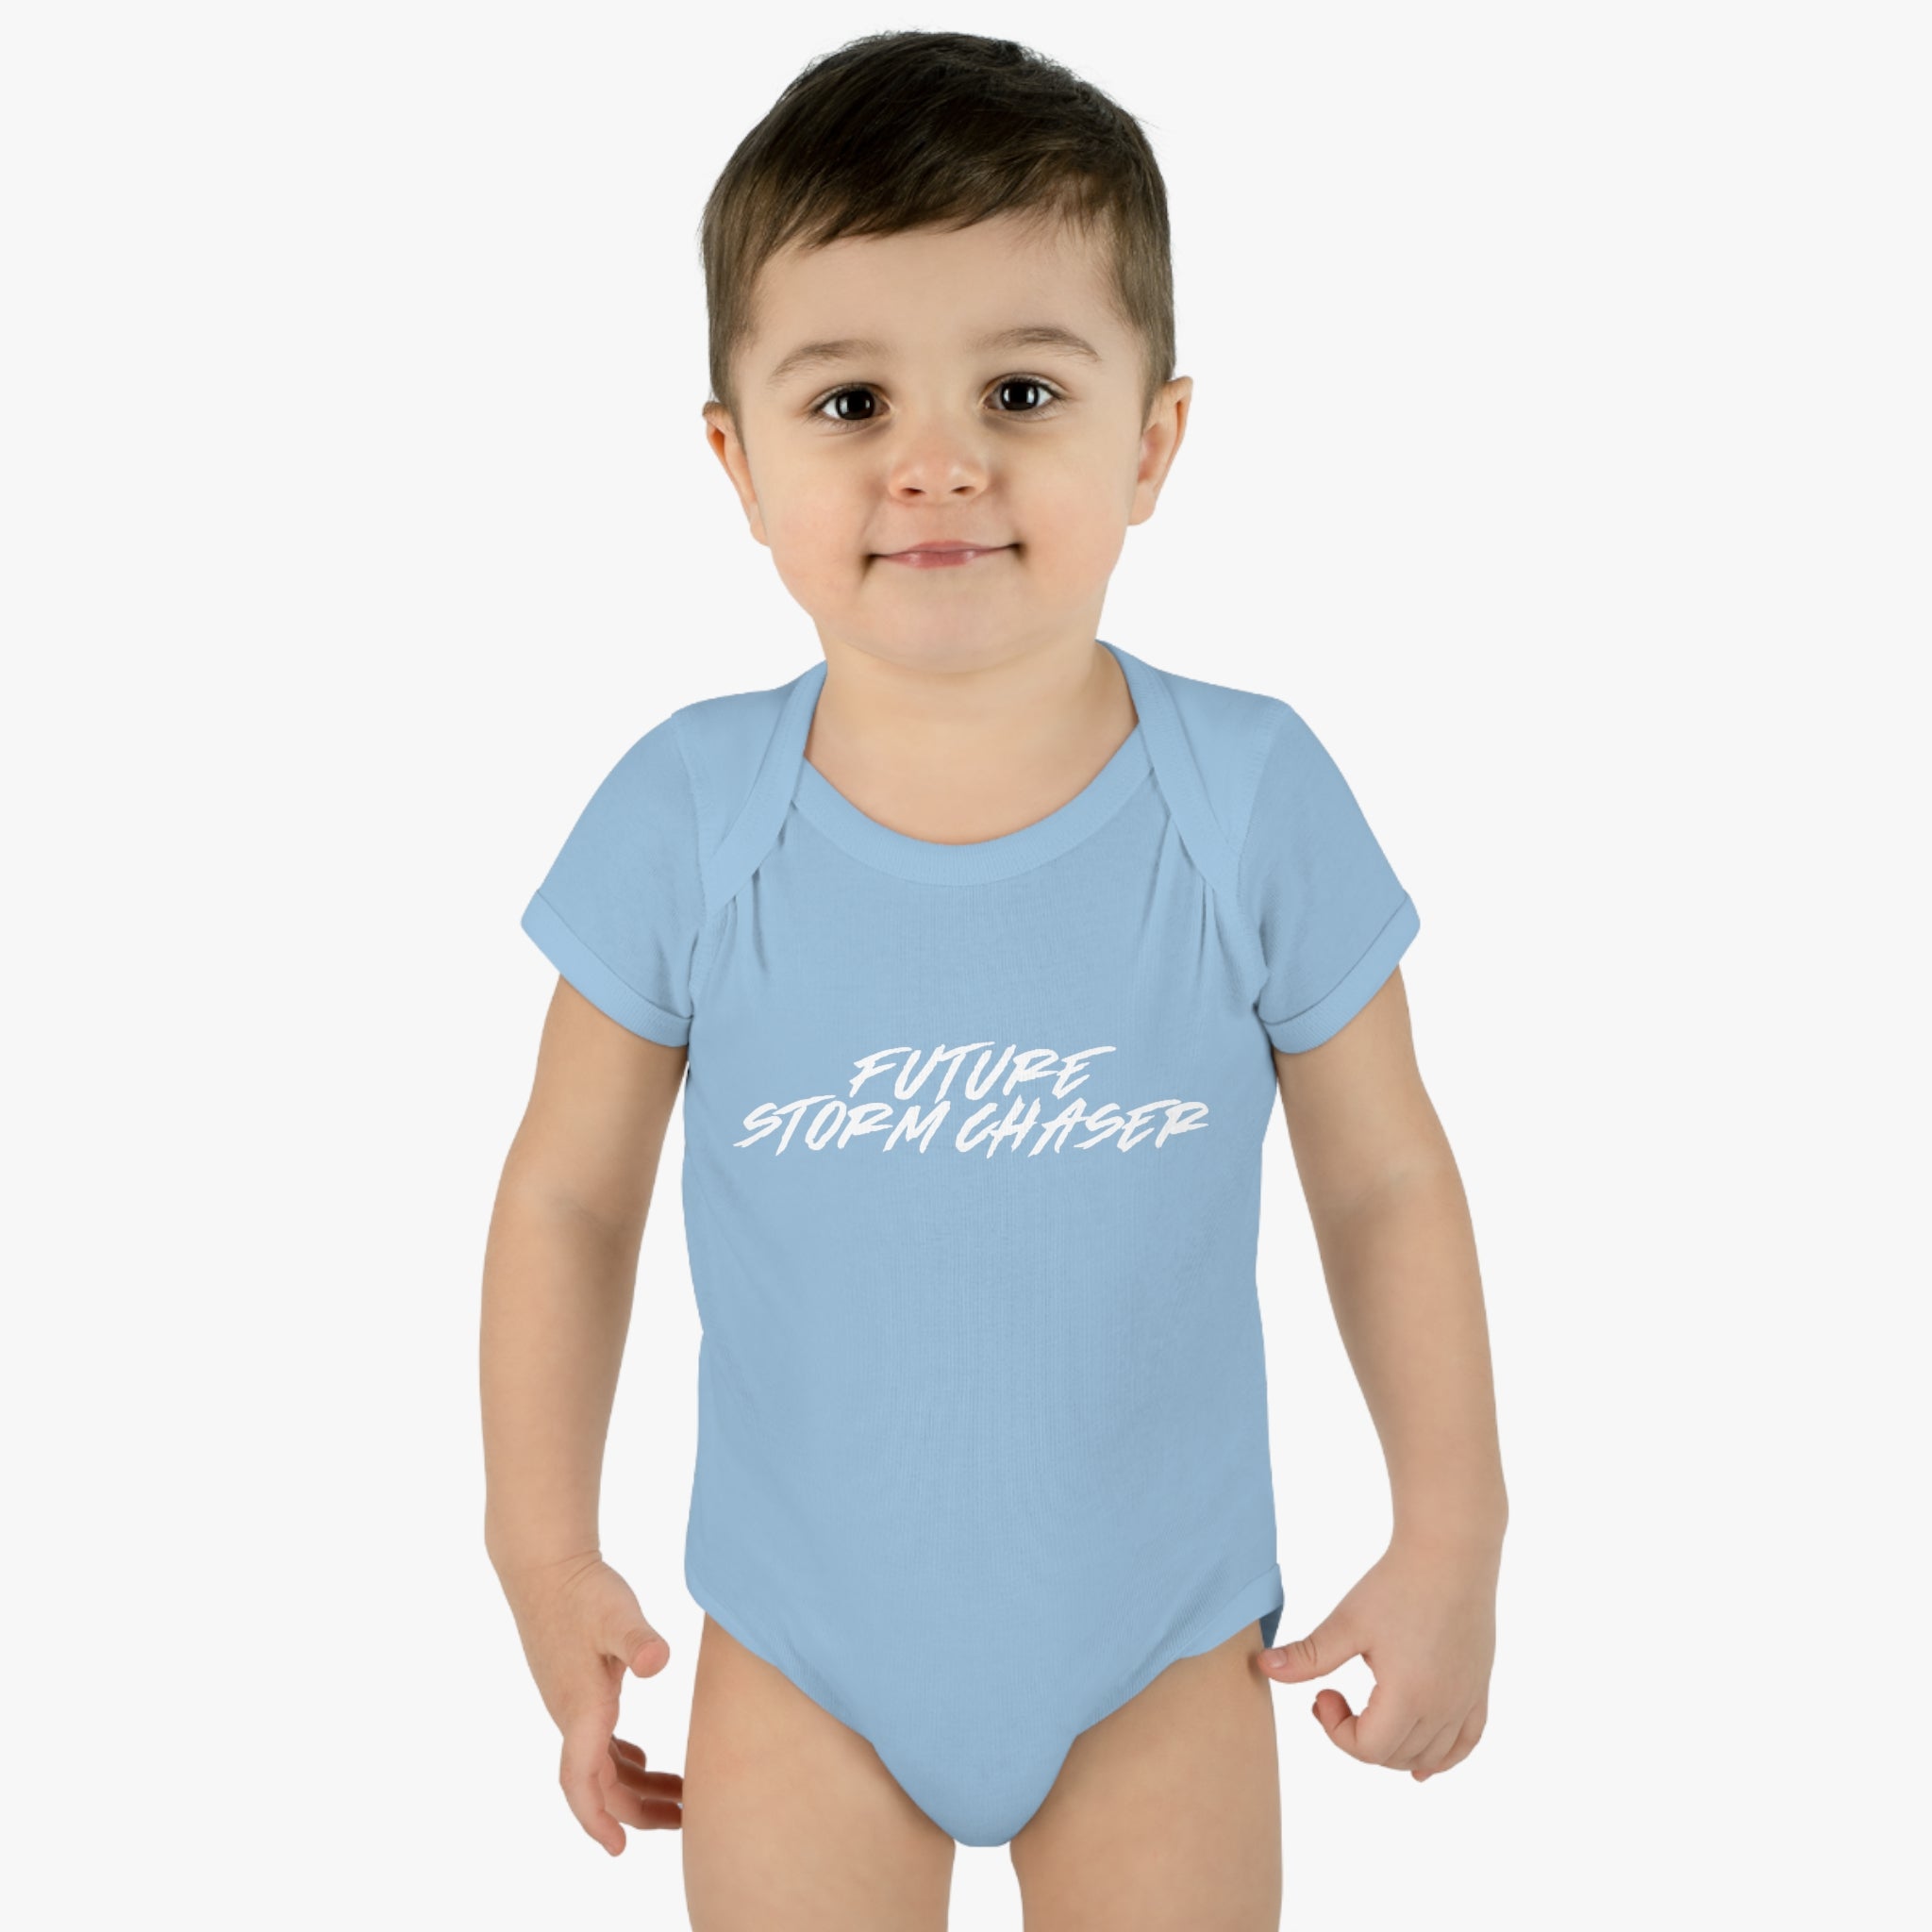 Future Storm Chaser Infant Bodysuit 